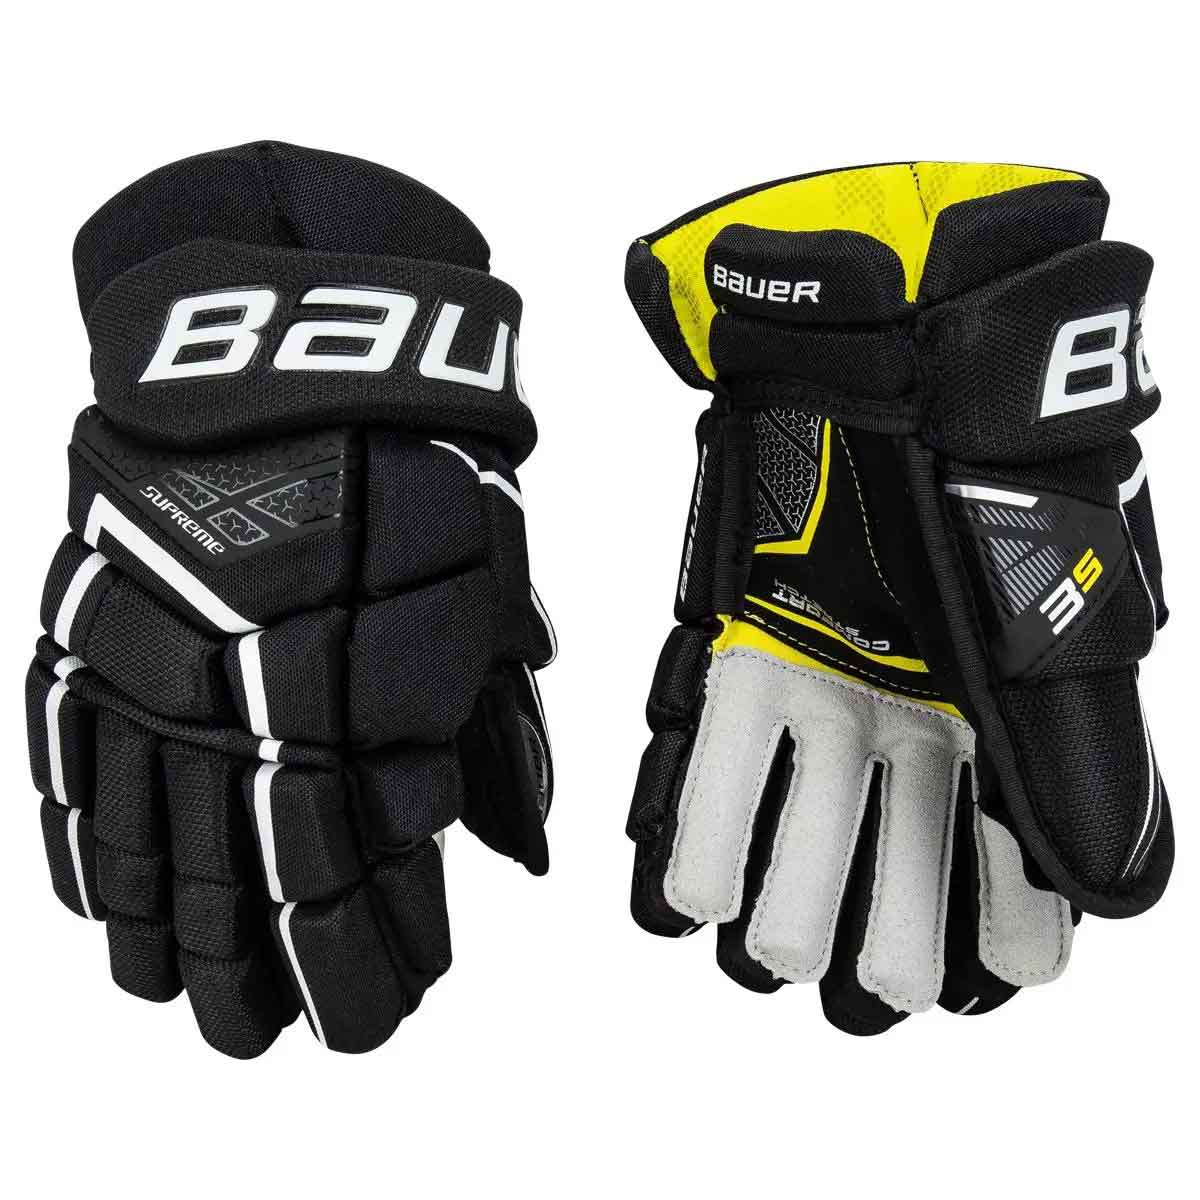 Bauer S21 Supreme 3S Ice Hockey Gloves (Junior) full view